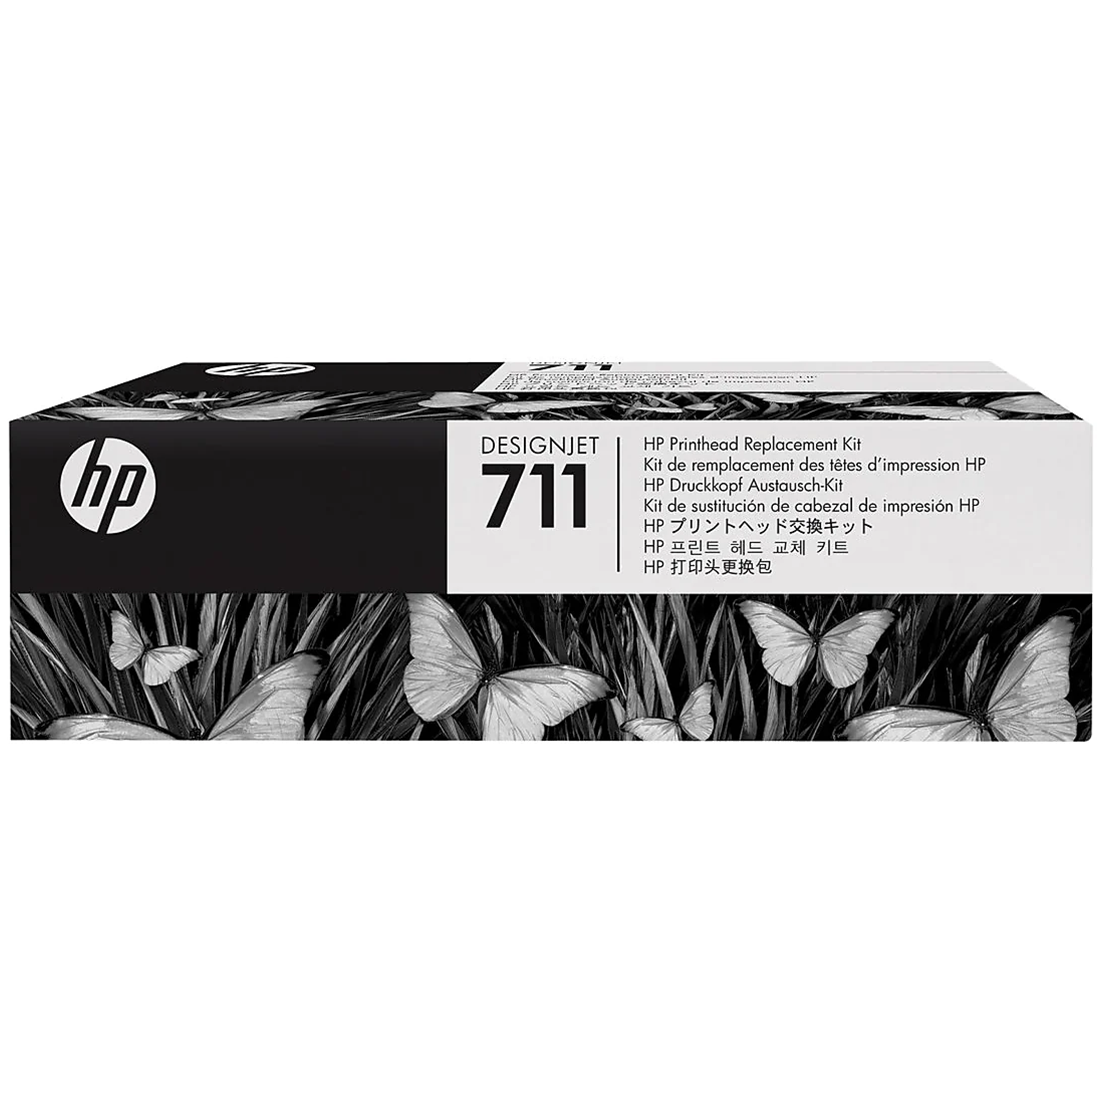 C1Q10A | HP 711 | Original HP DesignJet Printhead Replacement Kit - CMYK, Black, Cyan, Yellow, ,Magenta